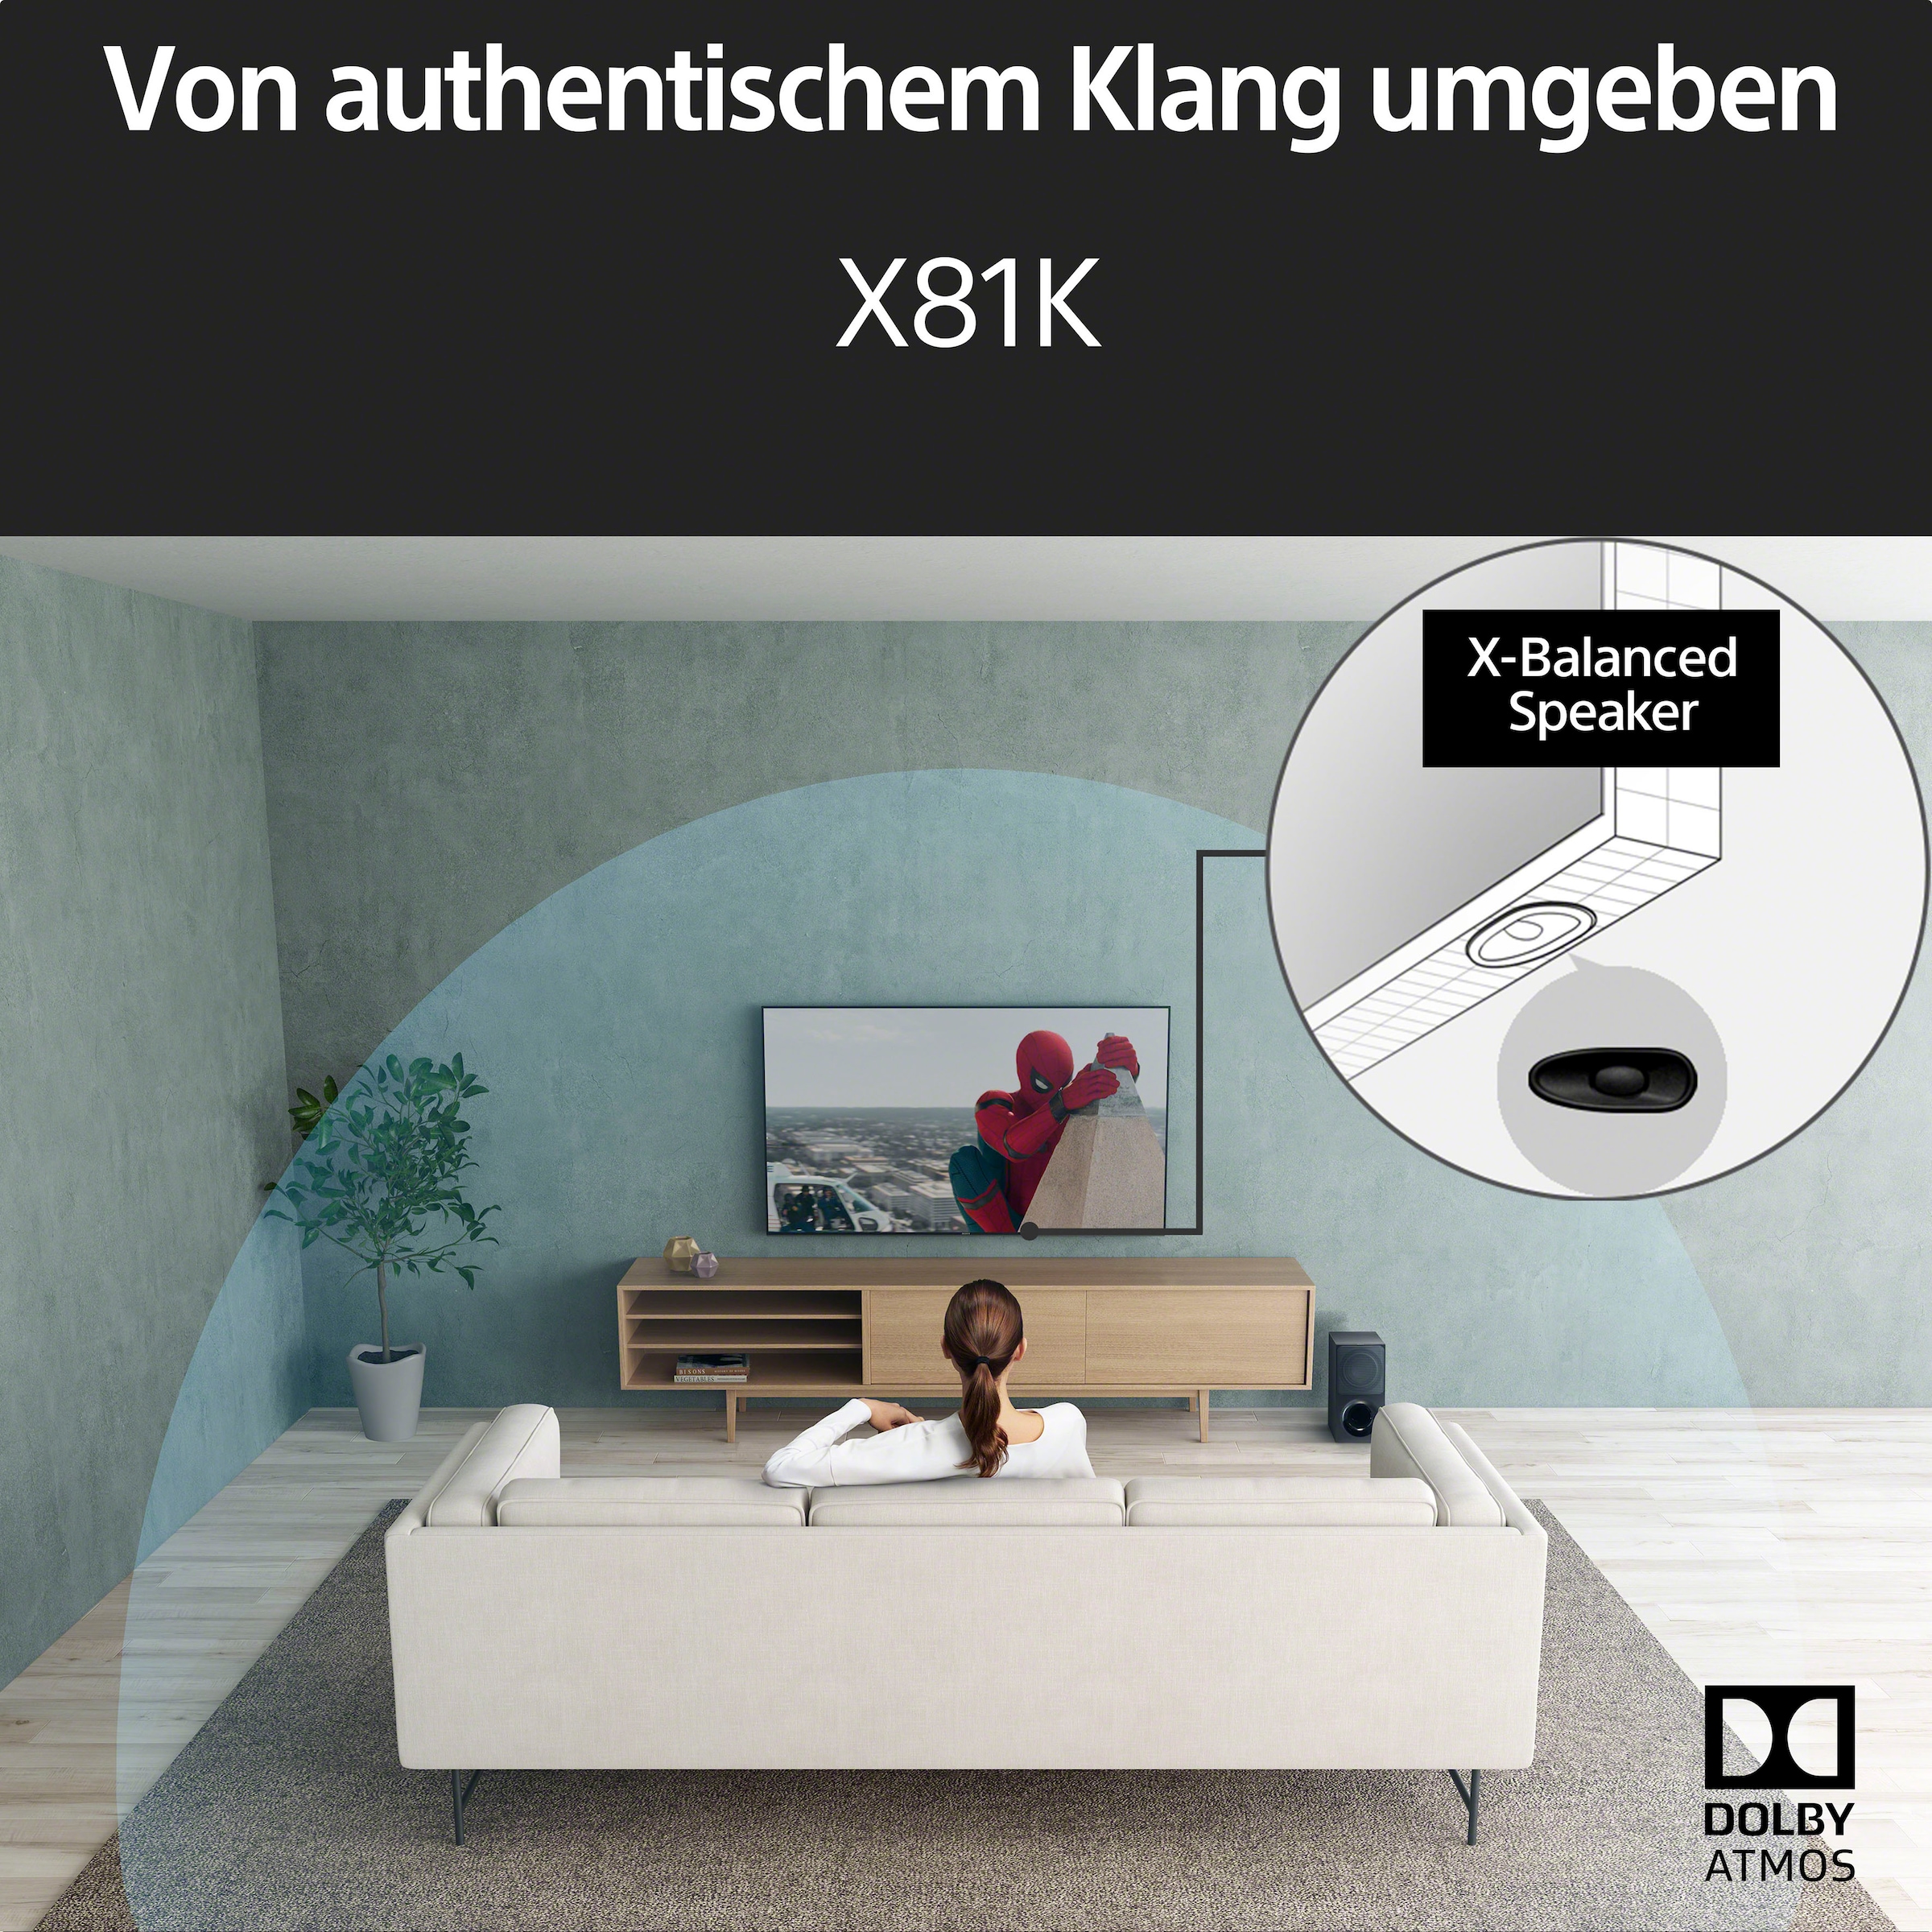 Sony LCD-LED Fernseher, 189 cm/75 Zoll, 4K Ultra HD, Google TV-Smart-TV